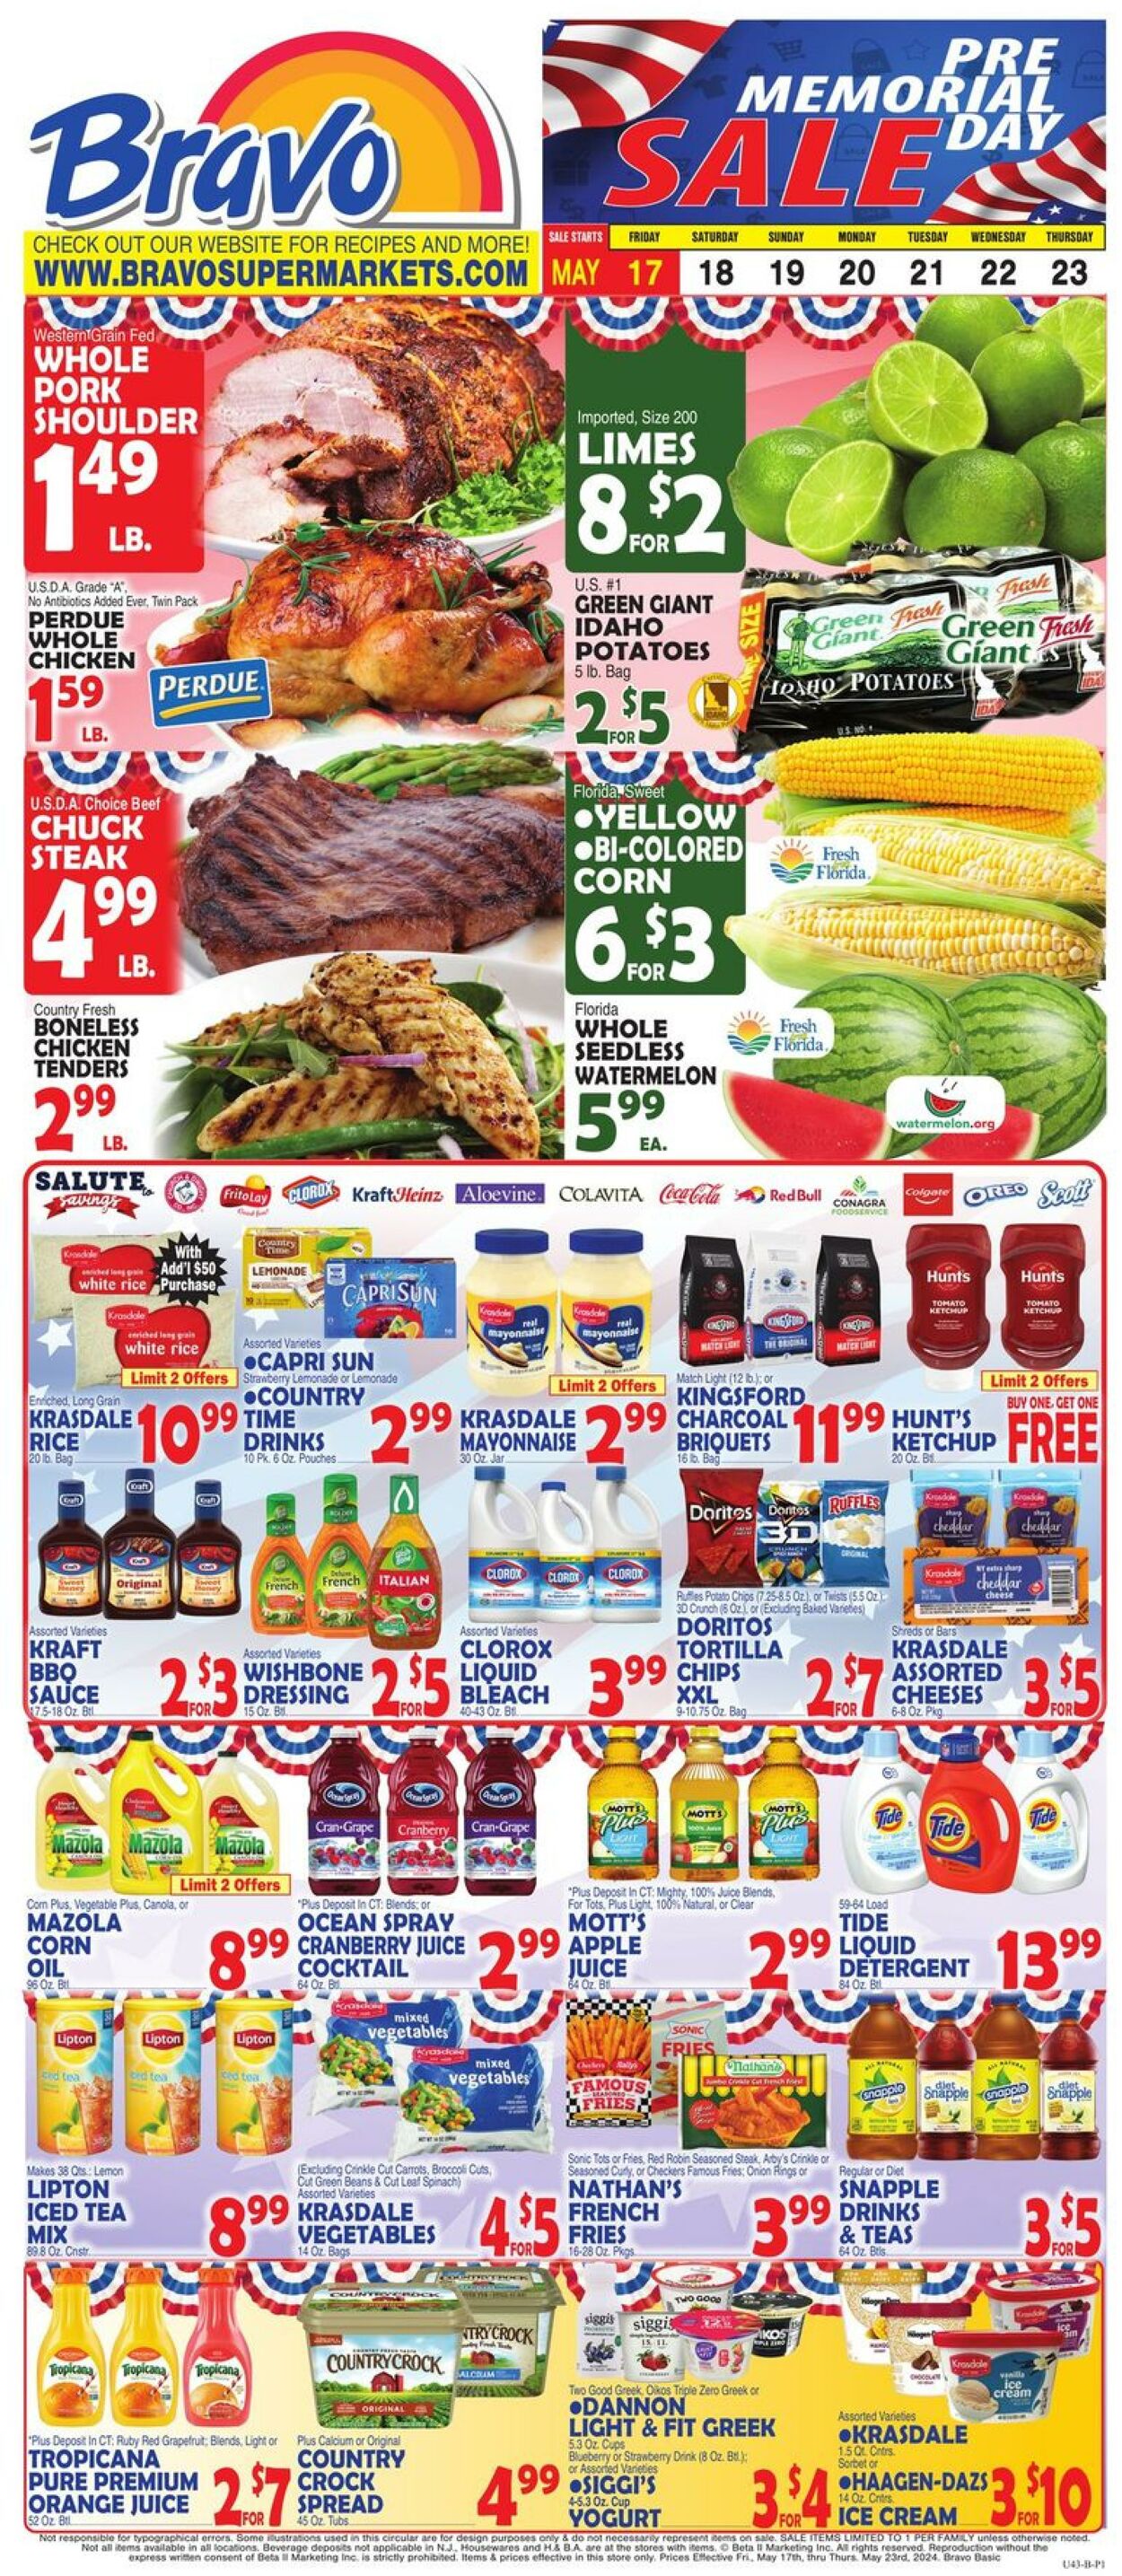 Bravo Supermarkets Promotional weekly ads